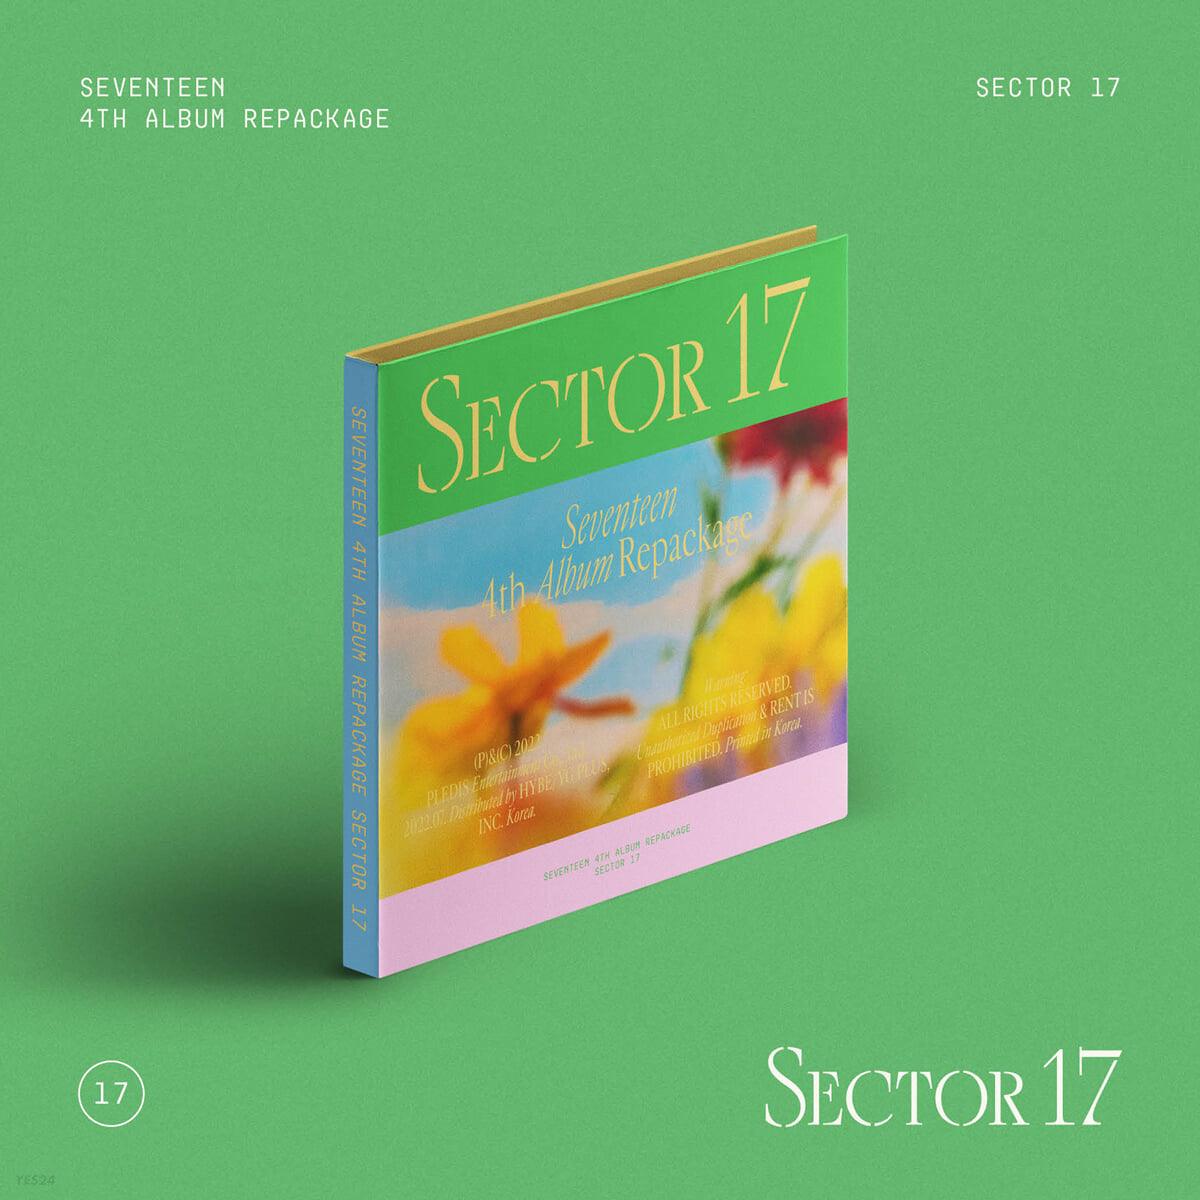 Seventeen Album Vol. 4 (Repackage) - SECTOR 17 (COMPACT Ver.) (Random 14 ver) - KKANG